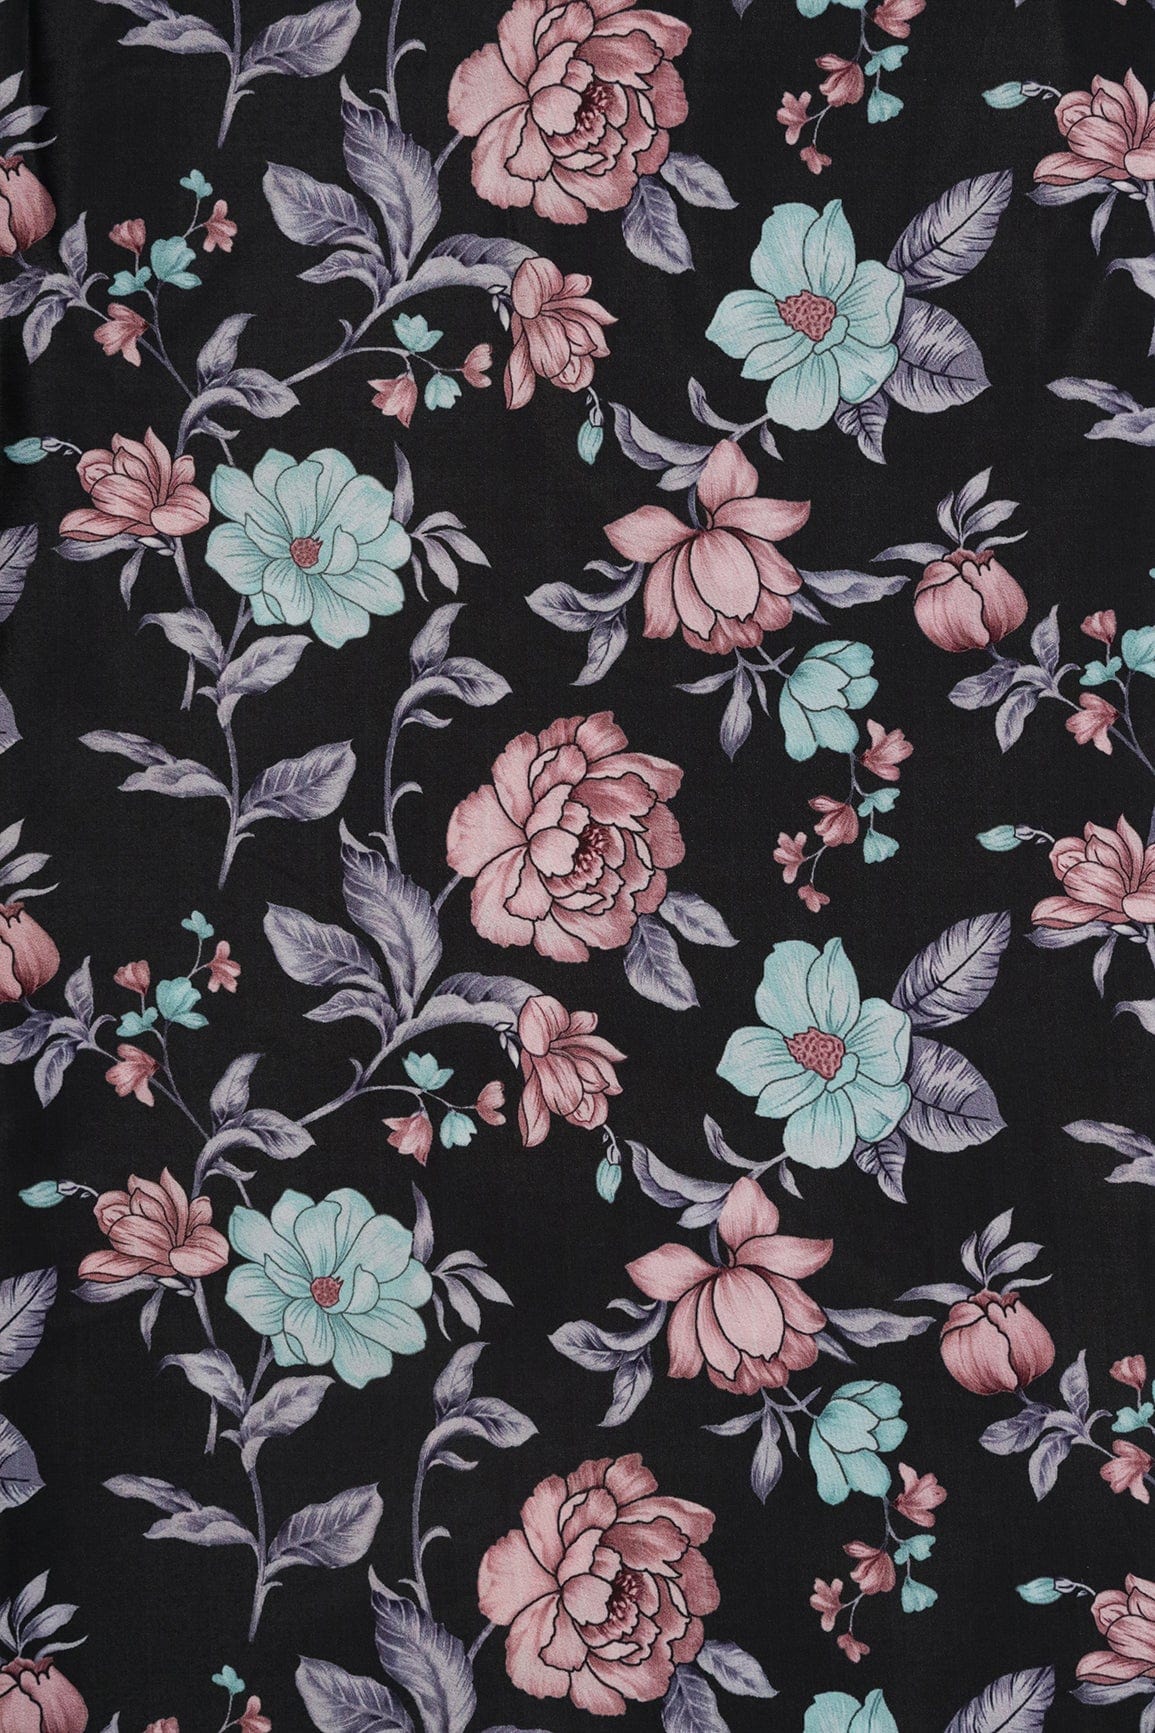 doeraa Prints Teal And Brown Floral Pattern Digital Print On Black Malai Crepe Fabric